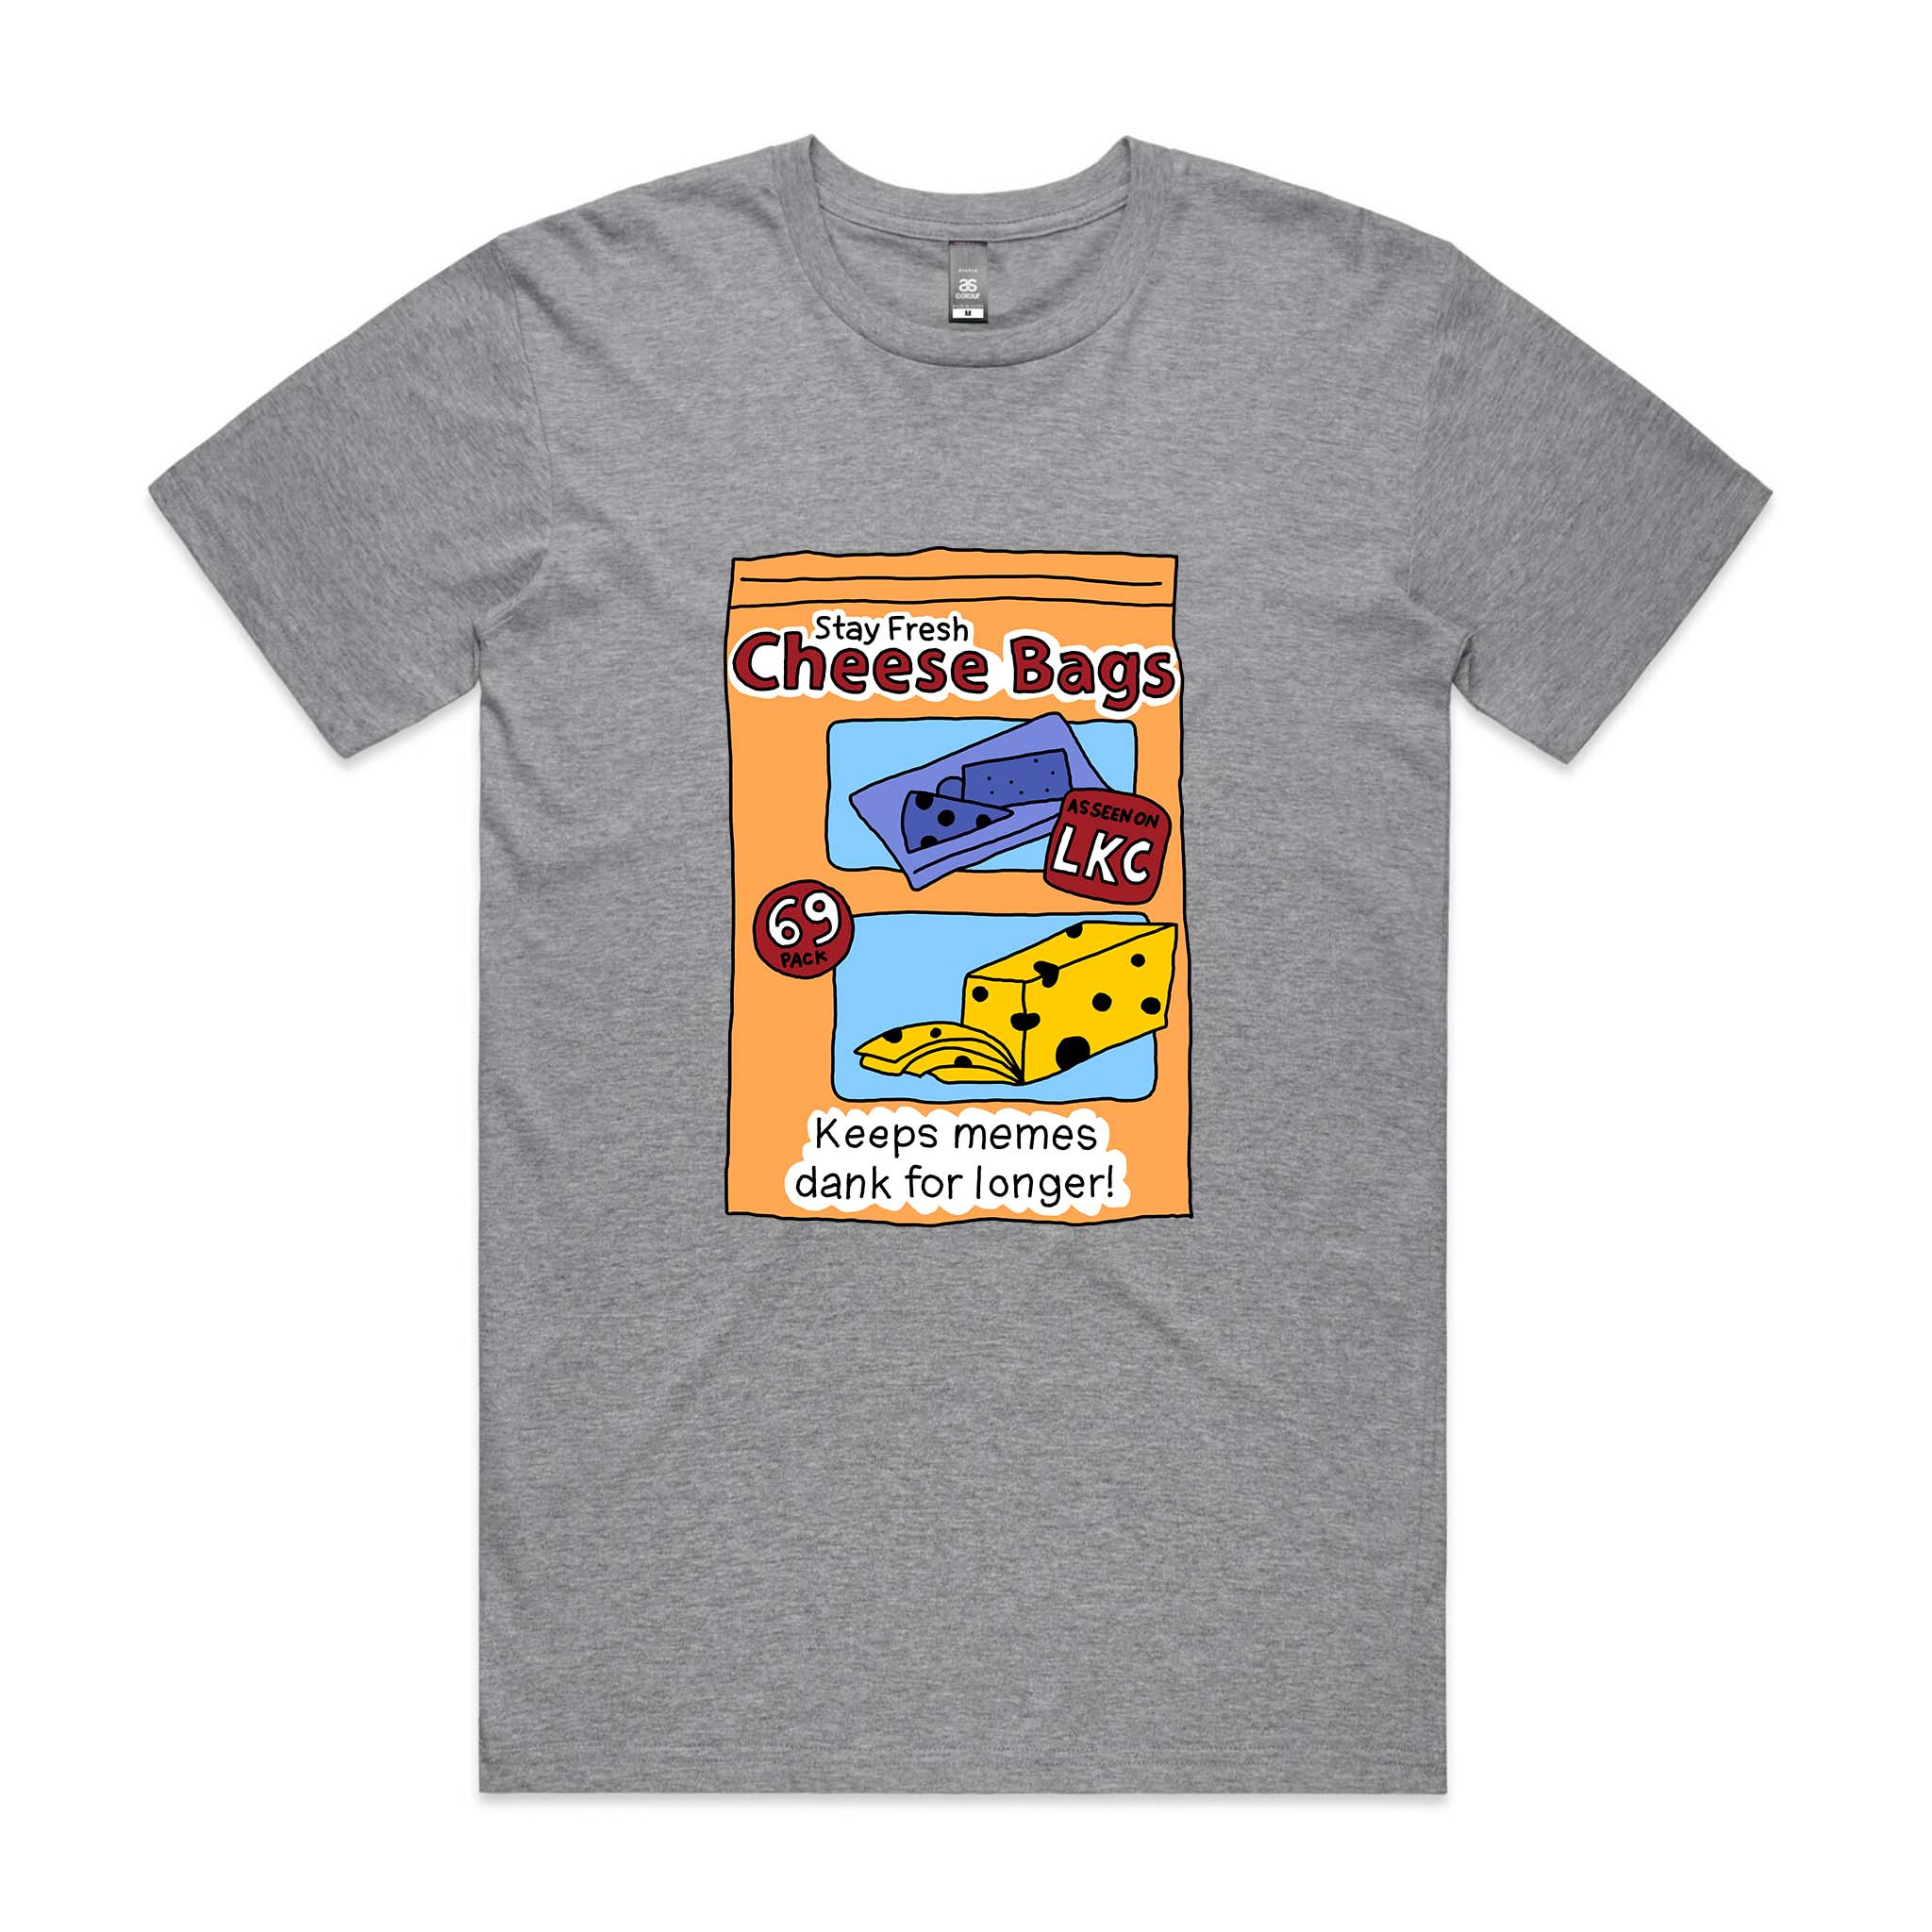 Stay Fresh Cheese Bags Tee